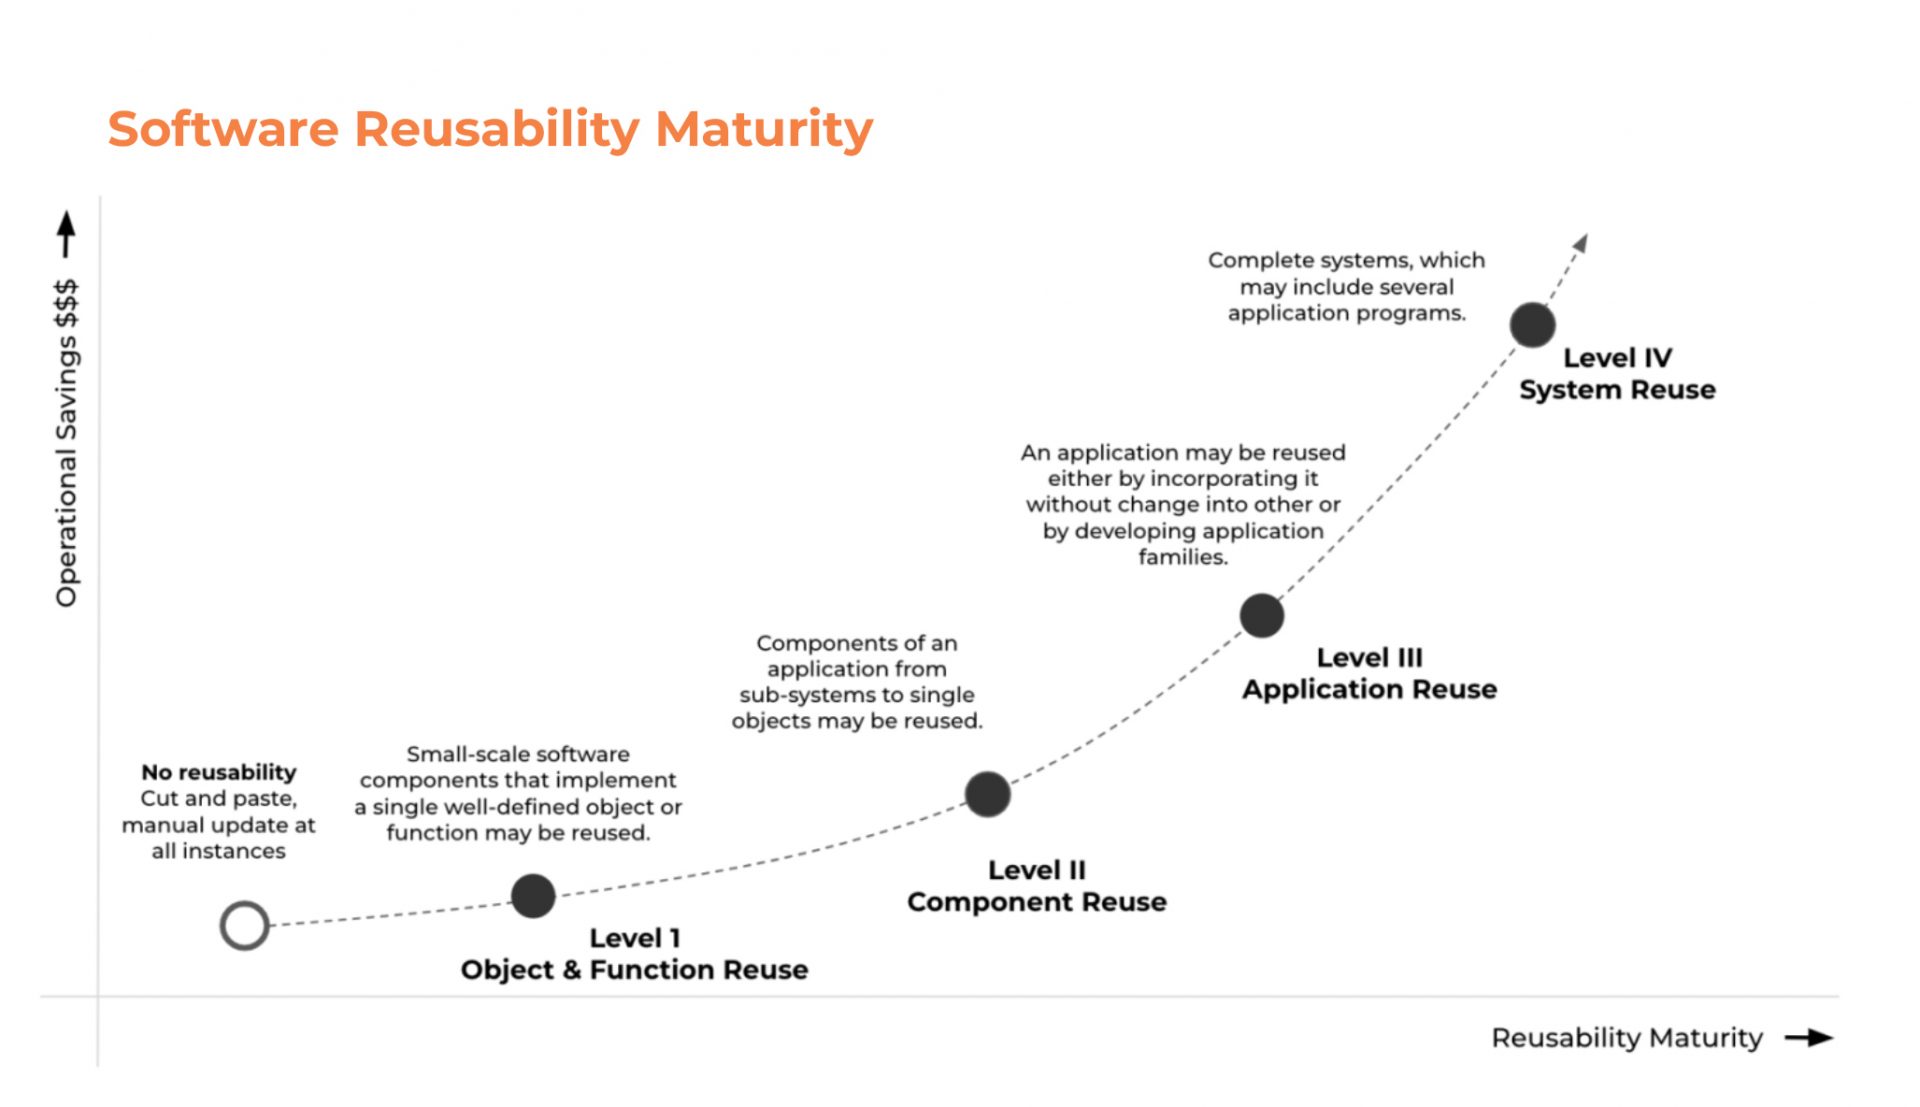 Software Reusability Maturity model